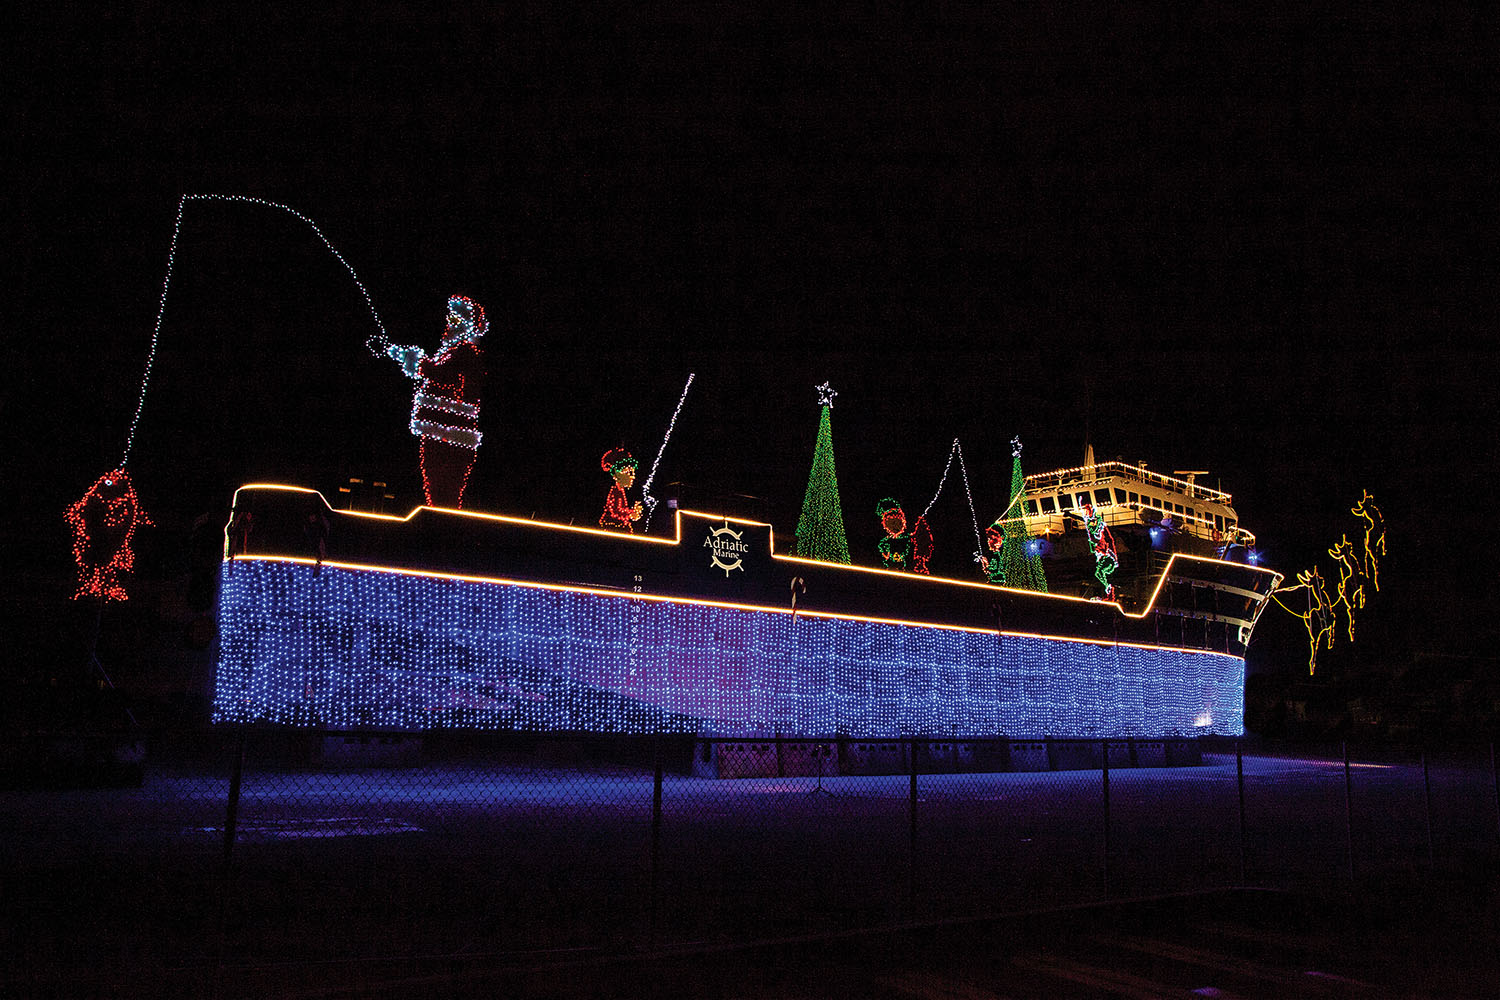 C&C Marine & Repair’s Christmas light display. (Photo by Frank McCormack)